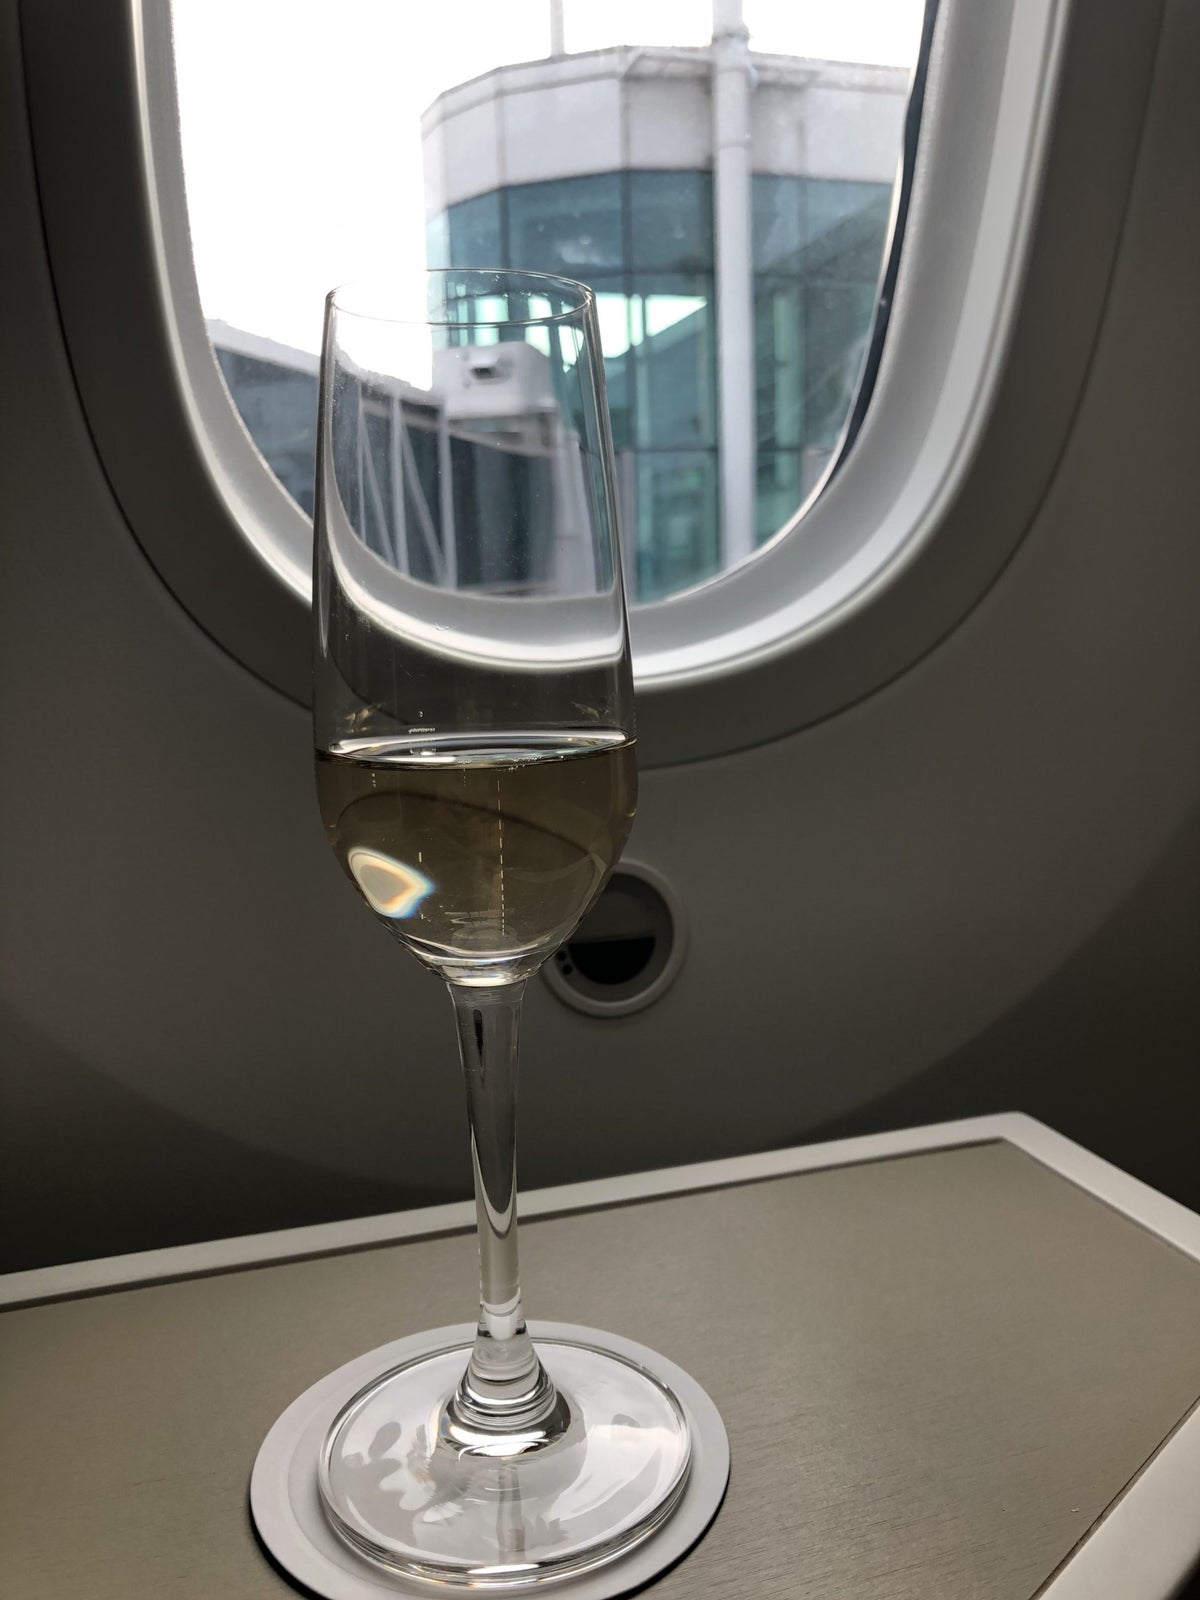 Vietnam Airlines 787-9 business class pre-departure champagne